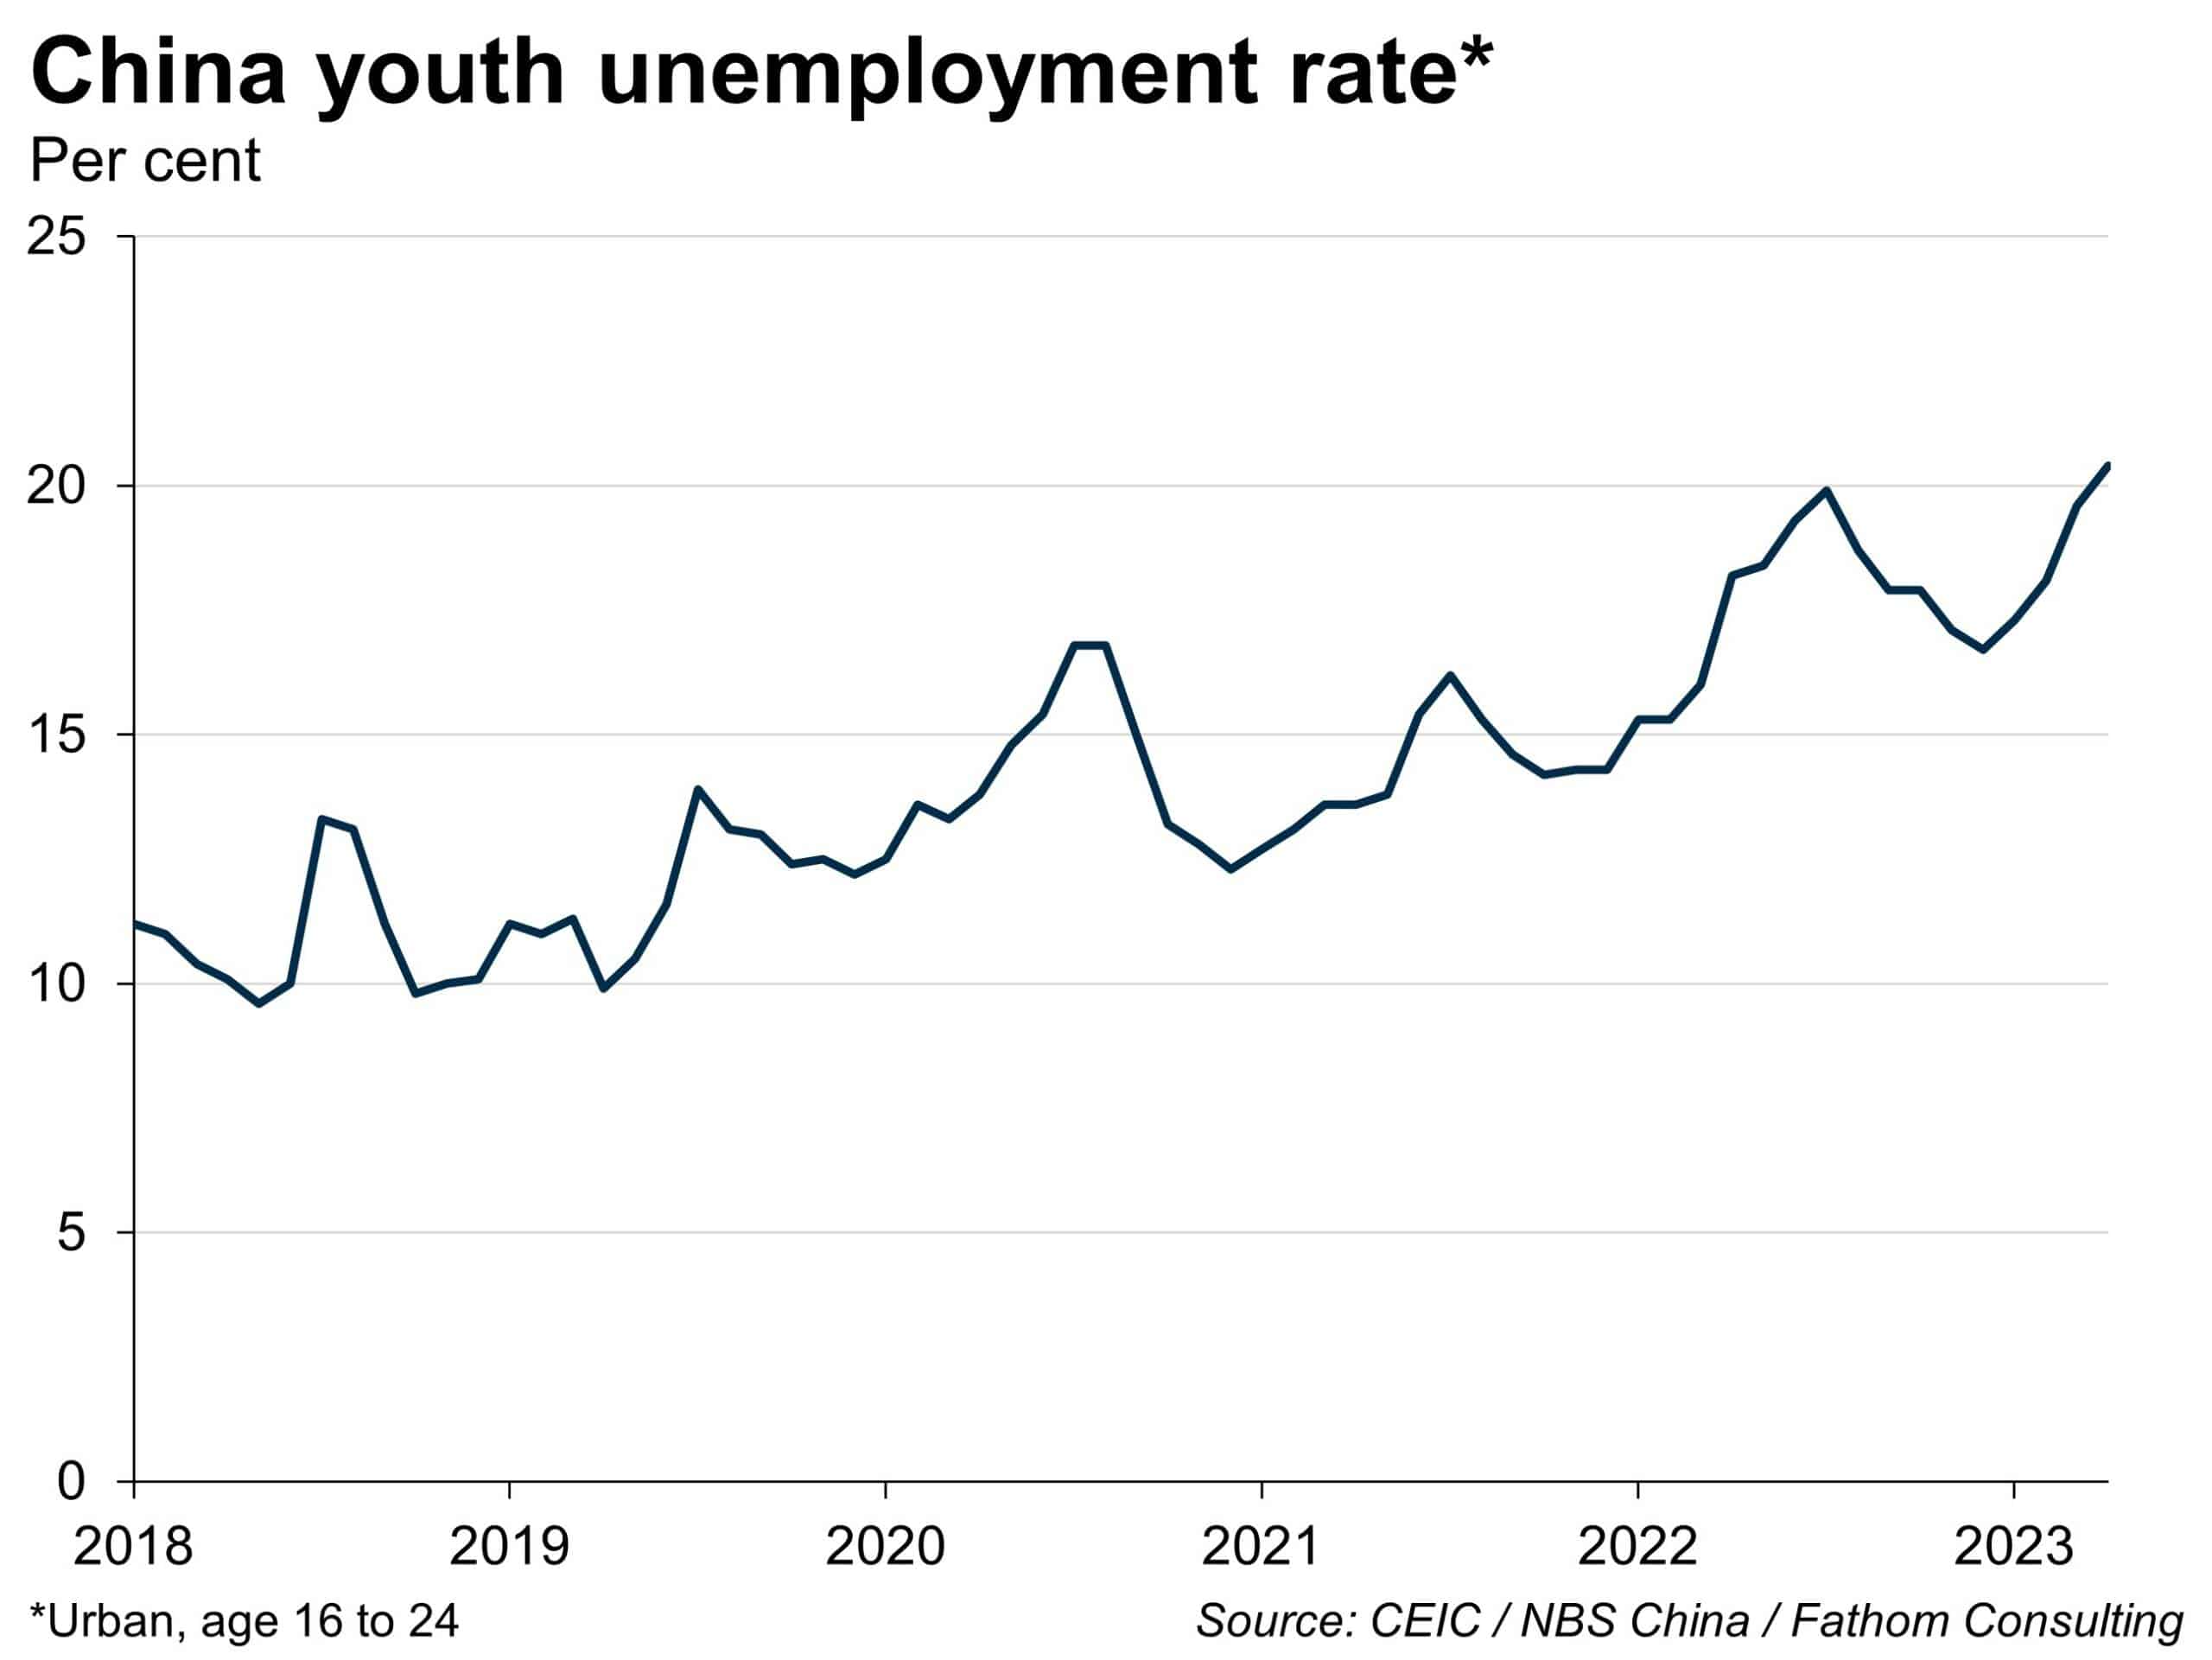 China Youth Unemployment data